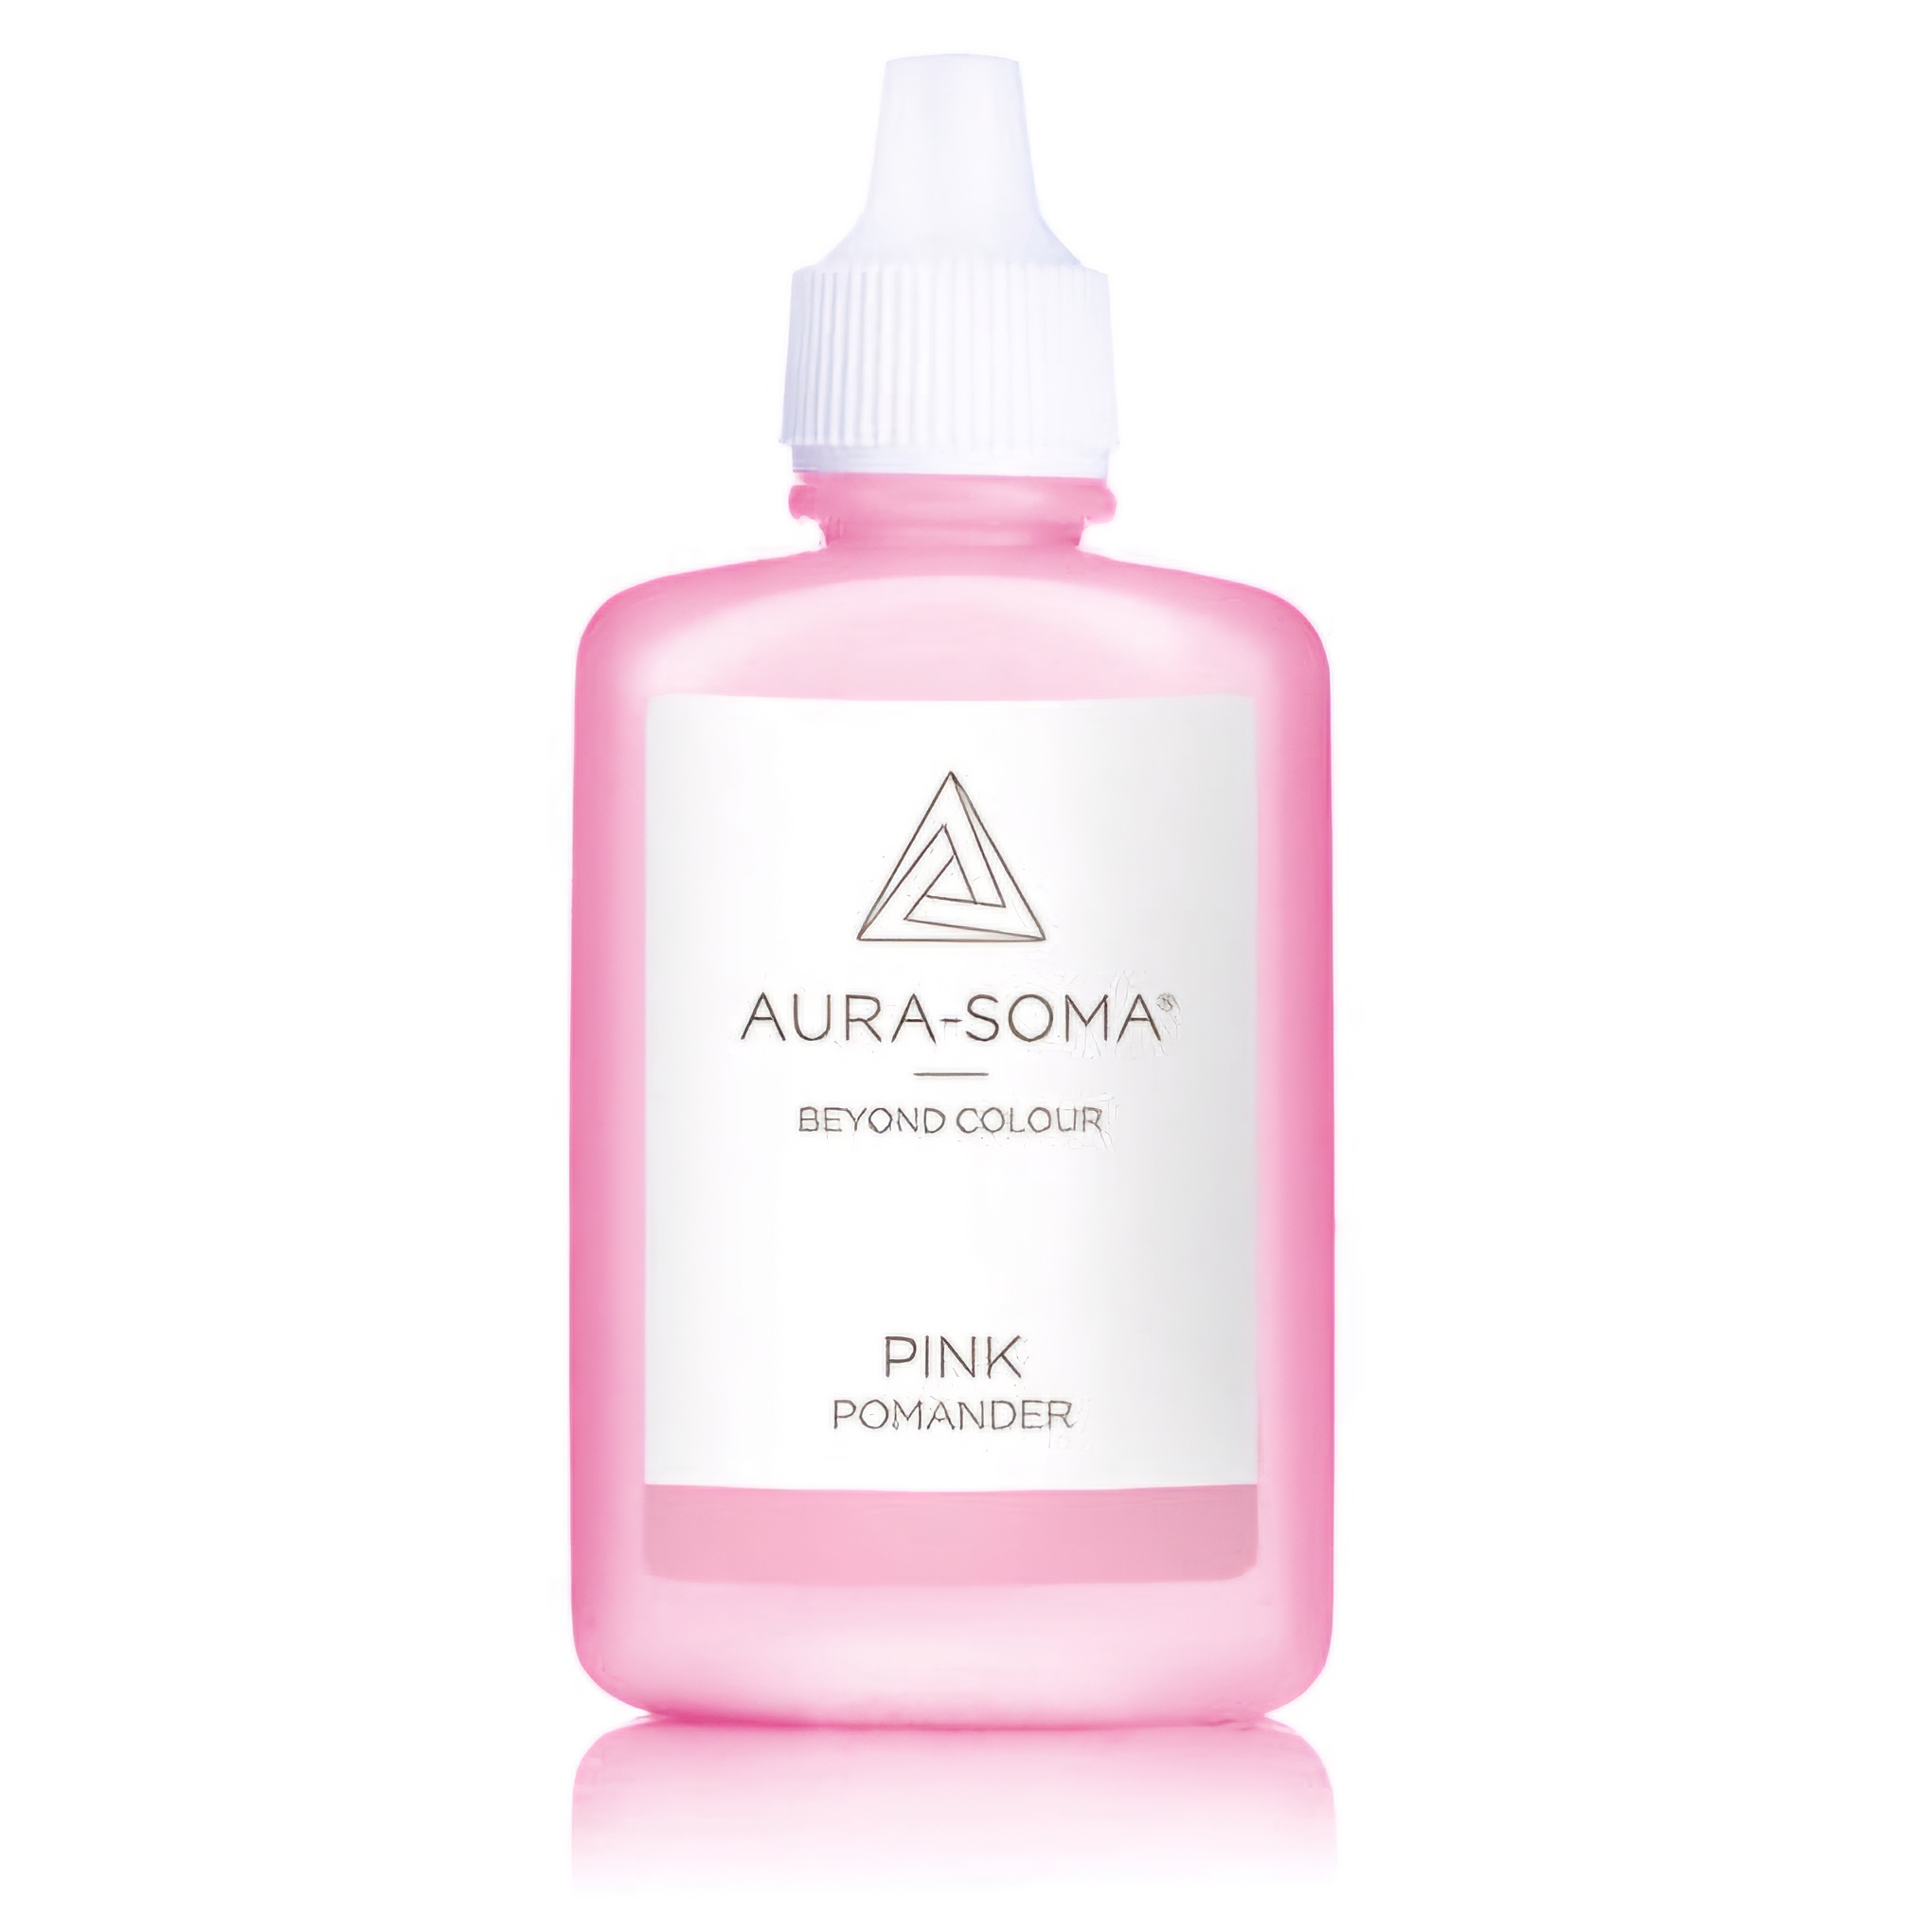 Aura-Soma pomander P02 Růžový je v plastové lahvičce ve verzi 25ml. Na obalu je etiketa se značkou Aura-Soma a nápisem 